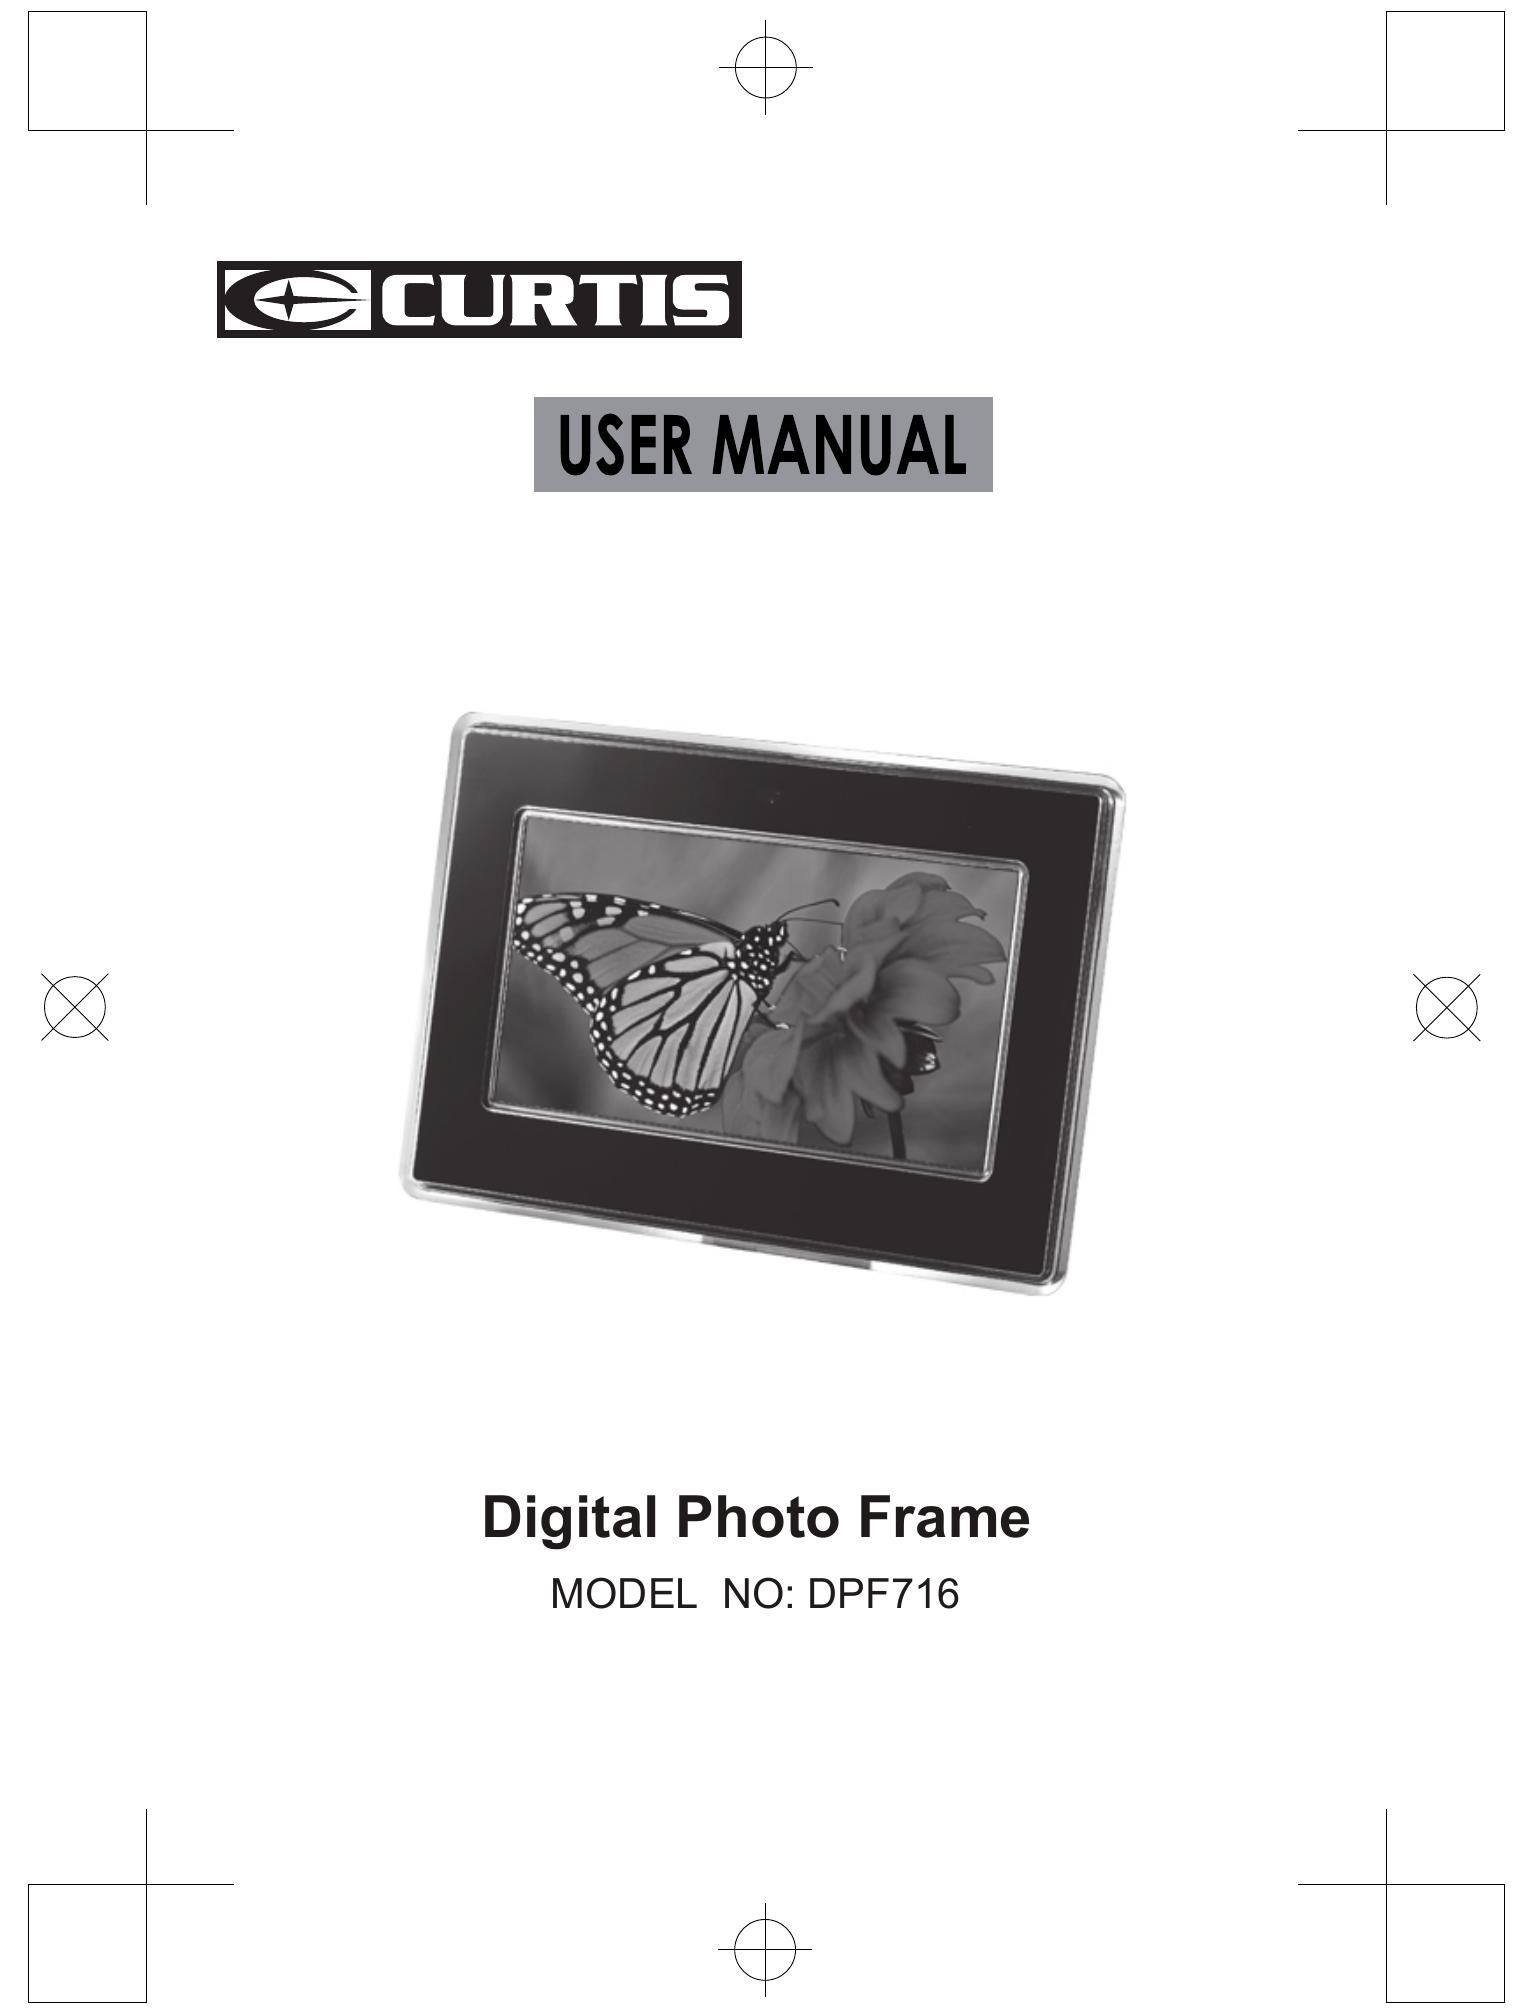 Curtis DPF716 Digital Photo Frame User Manual